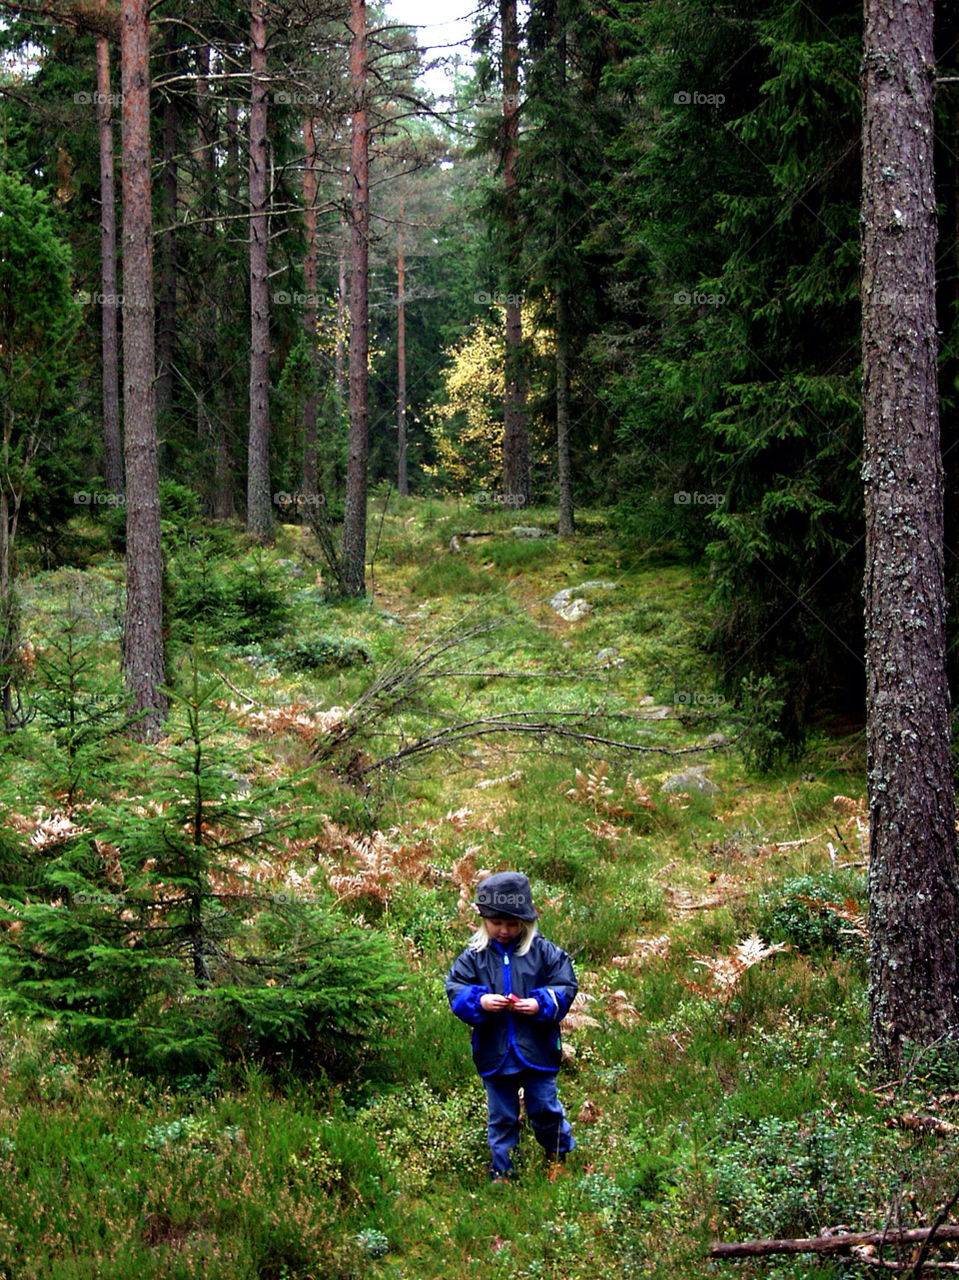 sweden barn träd skog by ojohan